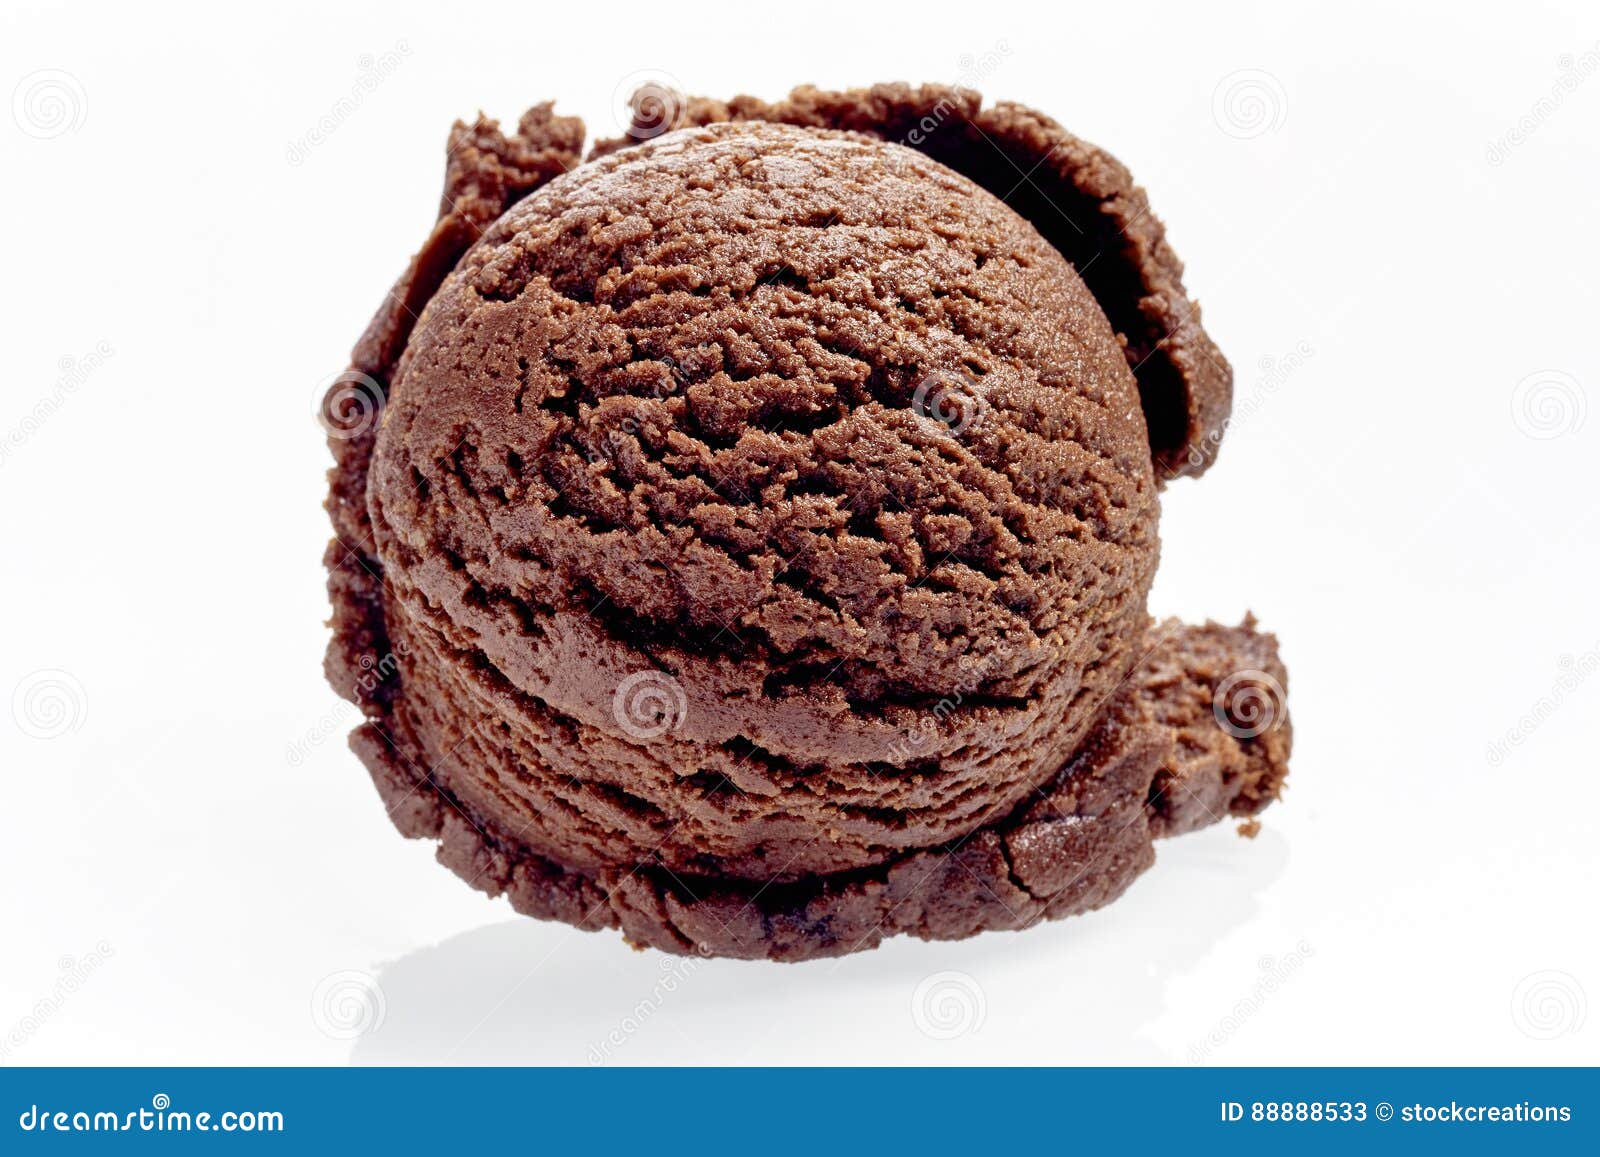 single scoop of rich chocolate ice cream